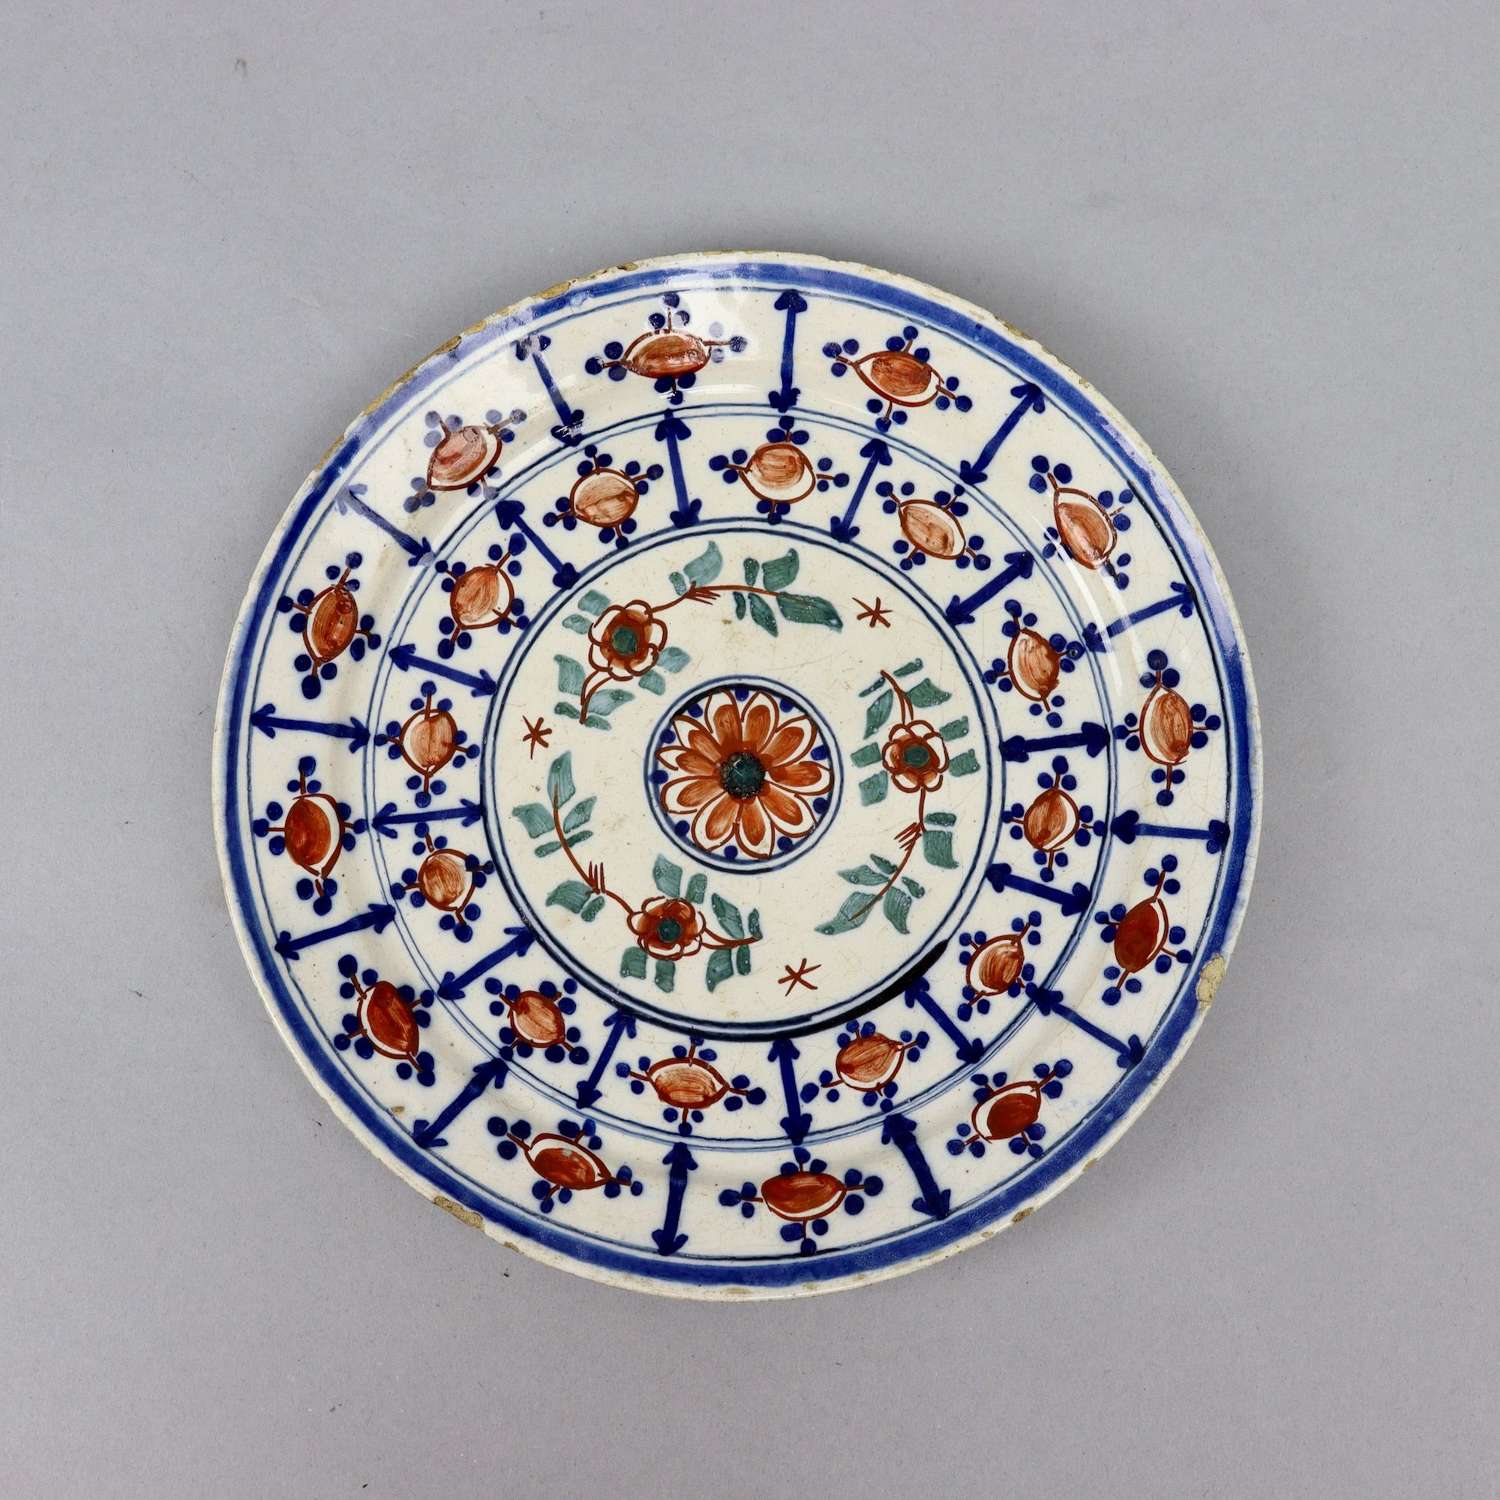 Delft Plate with Geometric Design